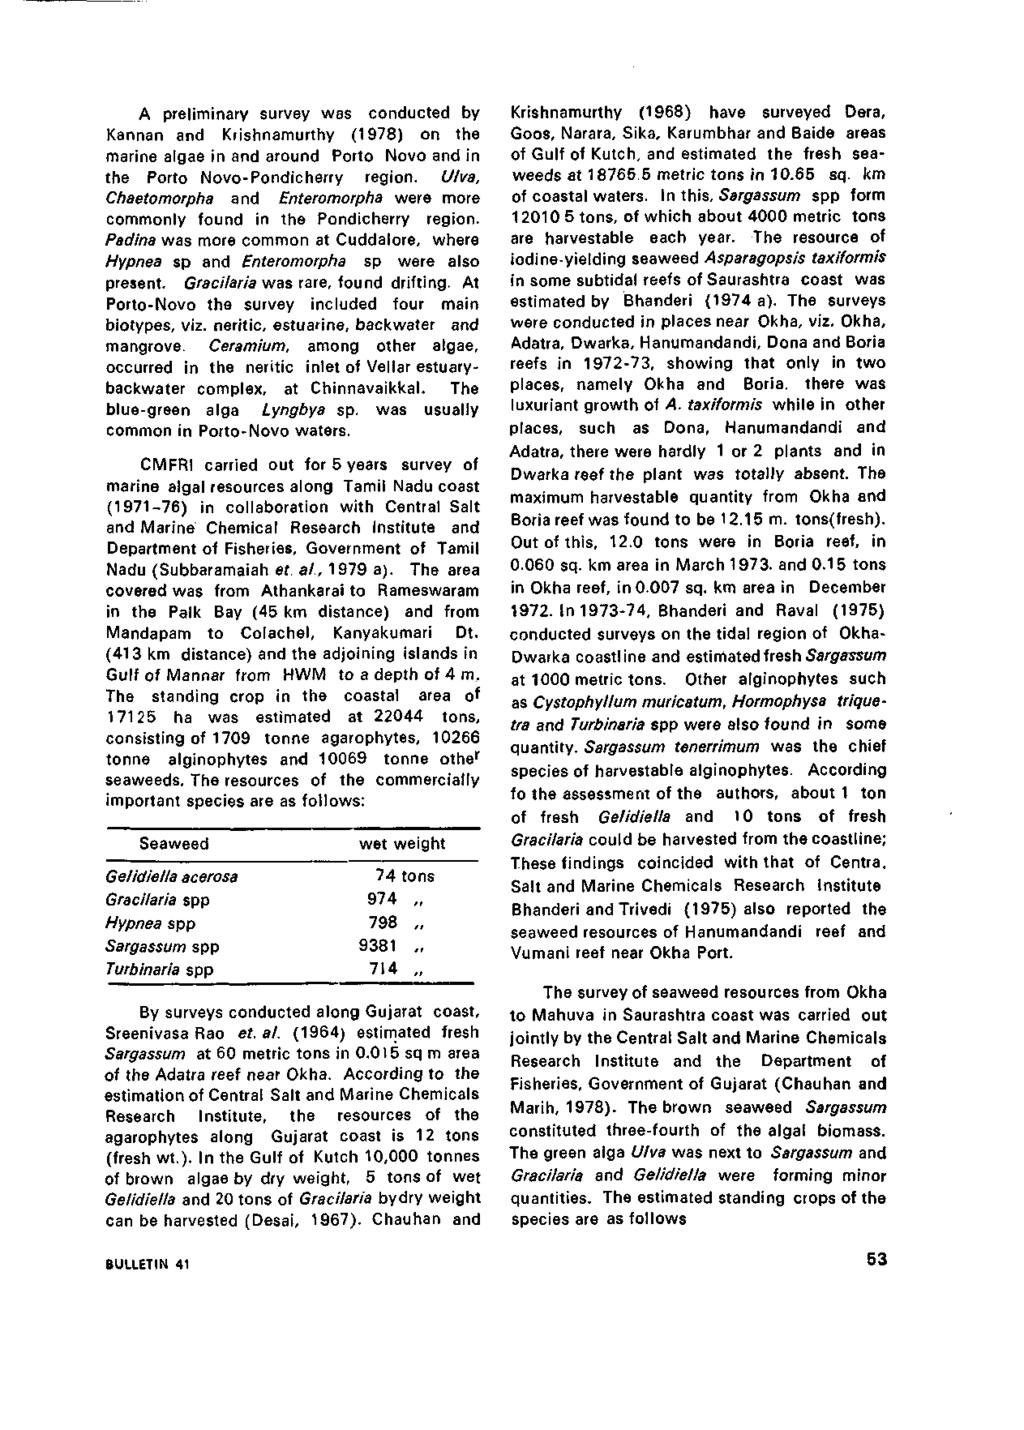 A preliminary survey was conducted by Kannan and Krishnamurthy (1978) on the marine algae in and around Porto Novo and in the Porto Novo-Pondicherry region.